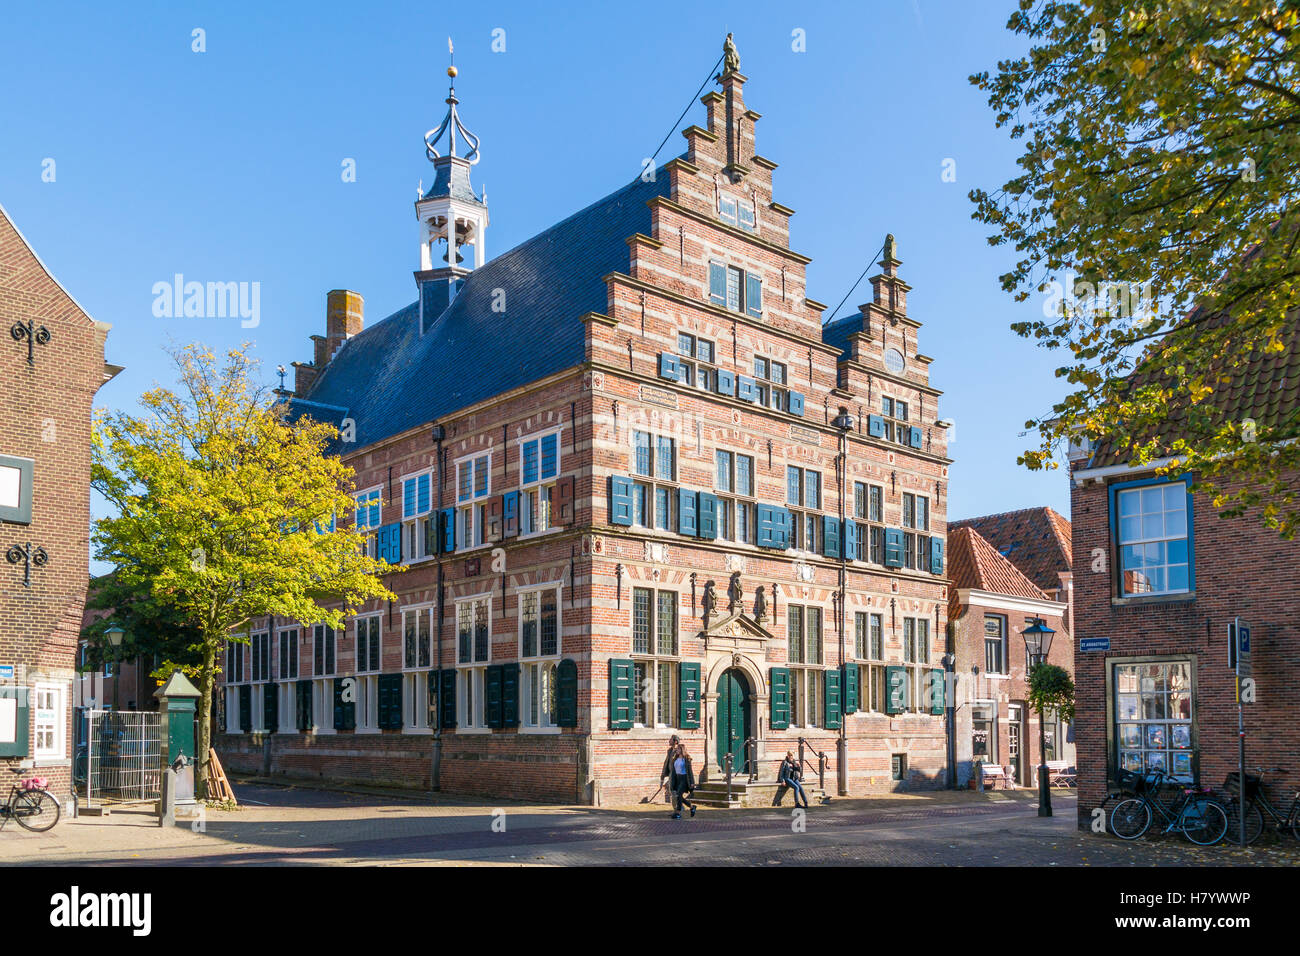 Town hall in Marktstraat street in old town of Naarden, North Holland, Netherlands Stock Photo